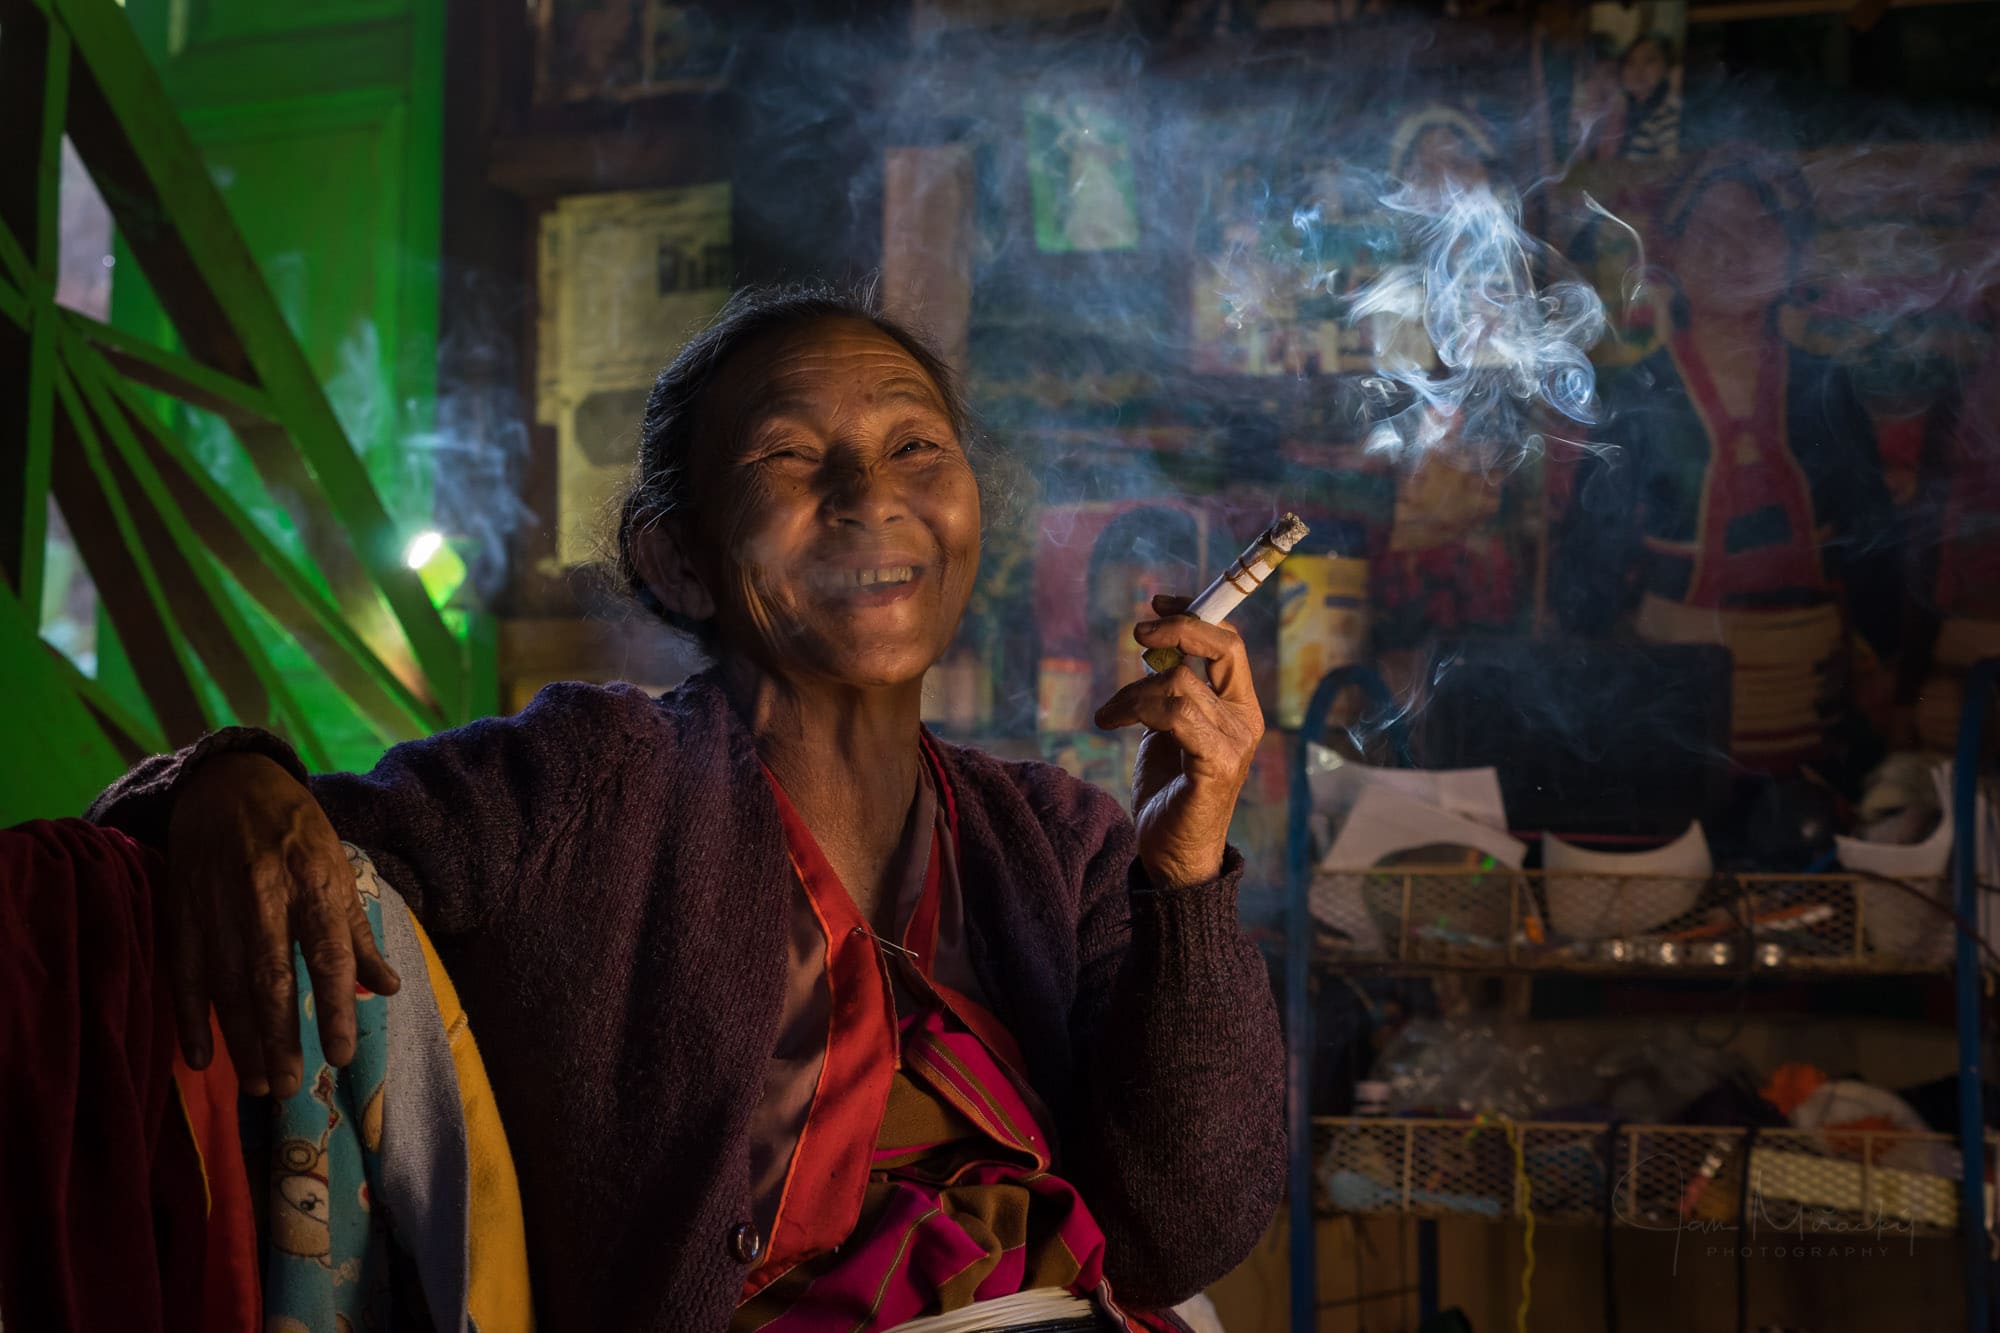 Old Shan woman smoking cigar